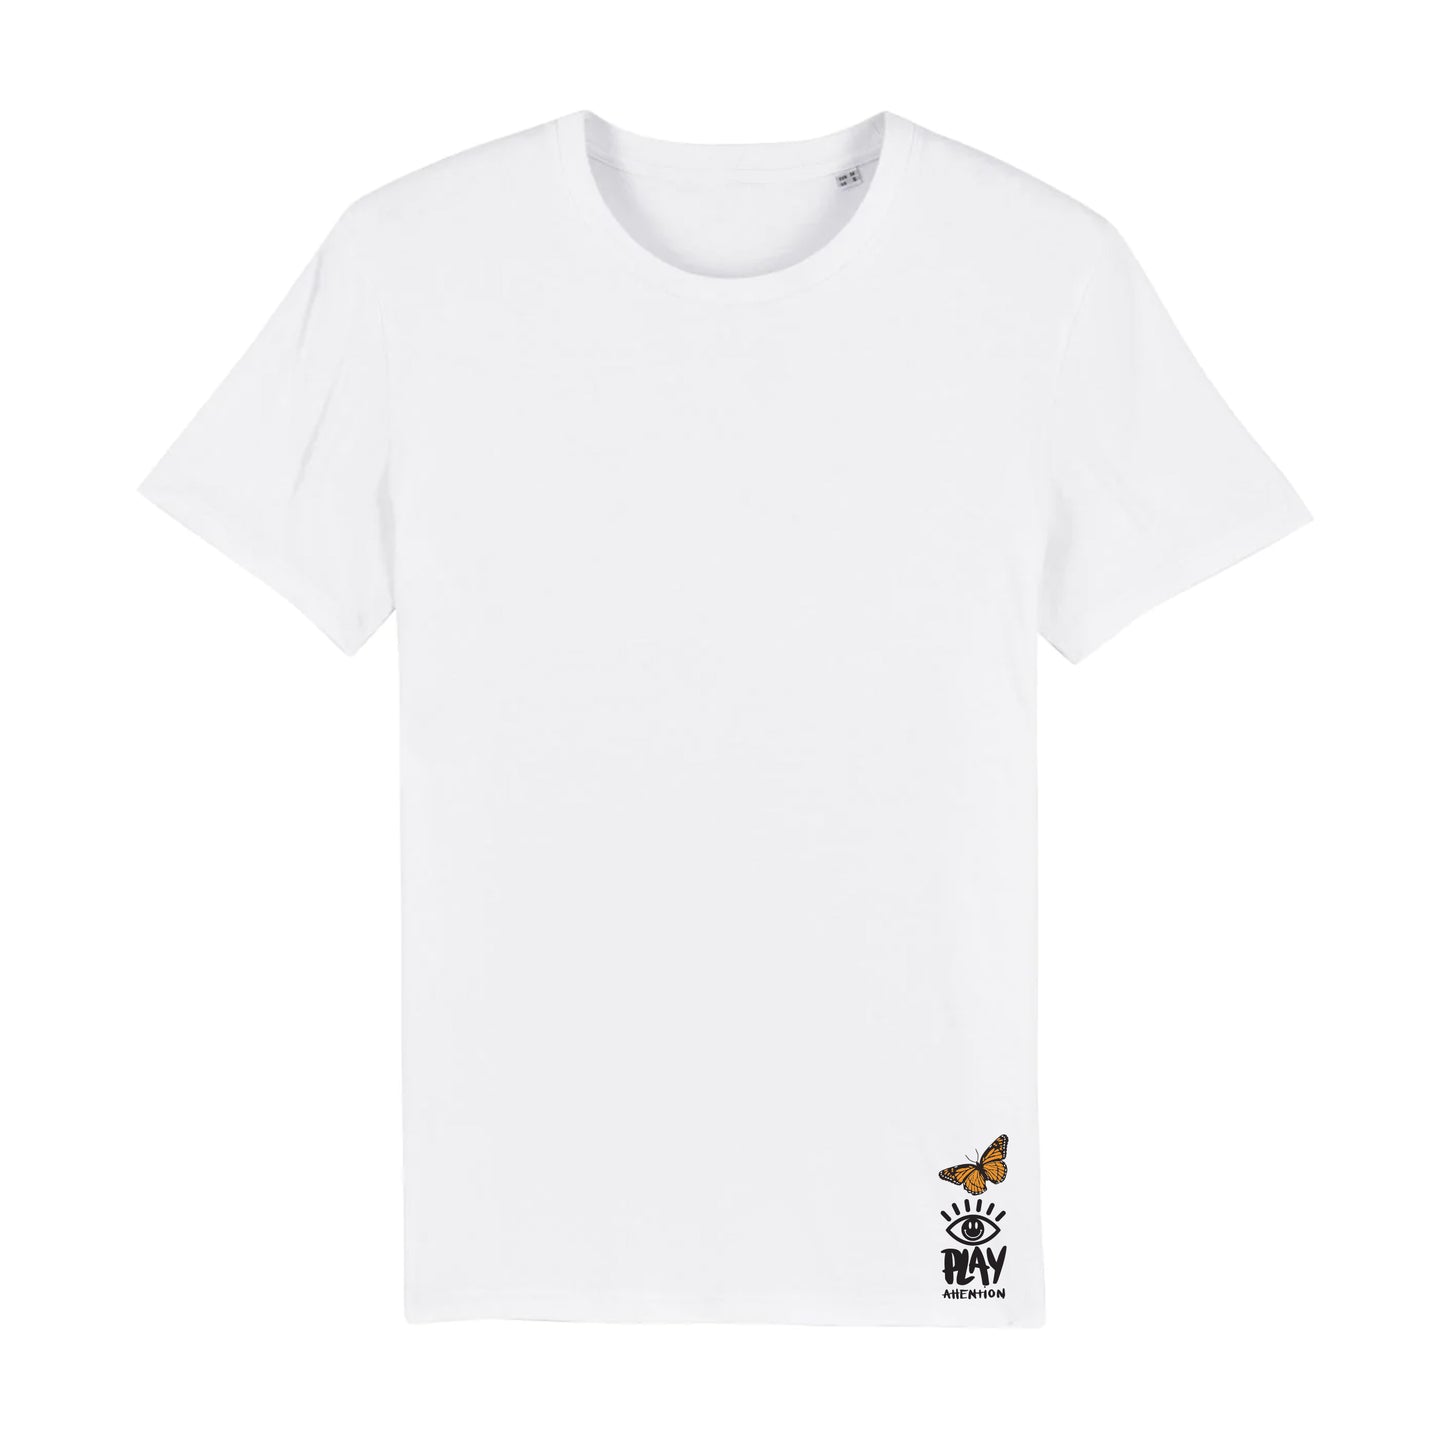 Secret Garden Party x Play Attention - Kissing Robots T-Shirt (White / Unisex Fit)